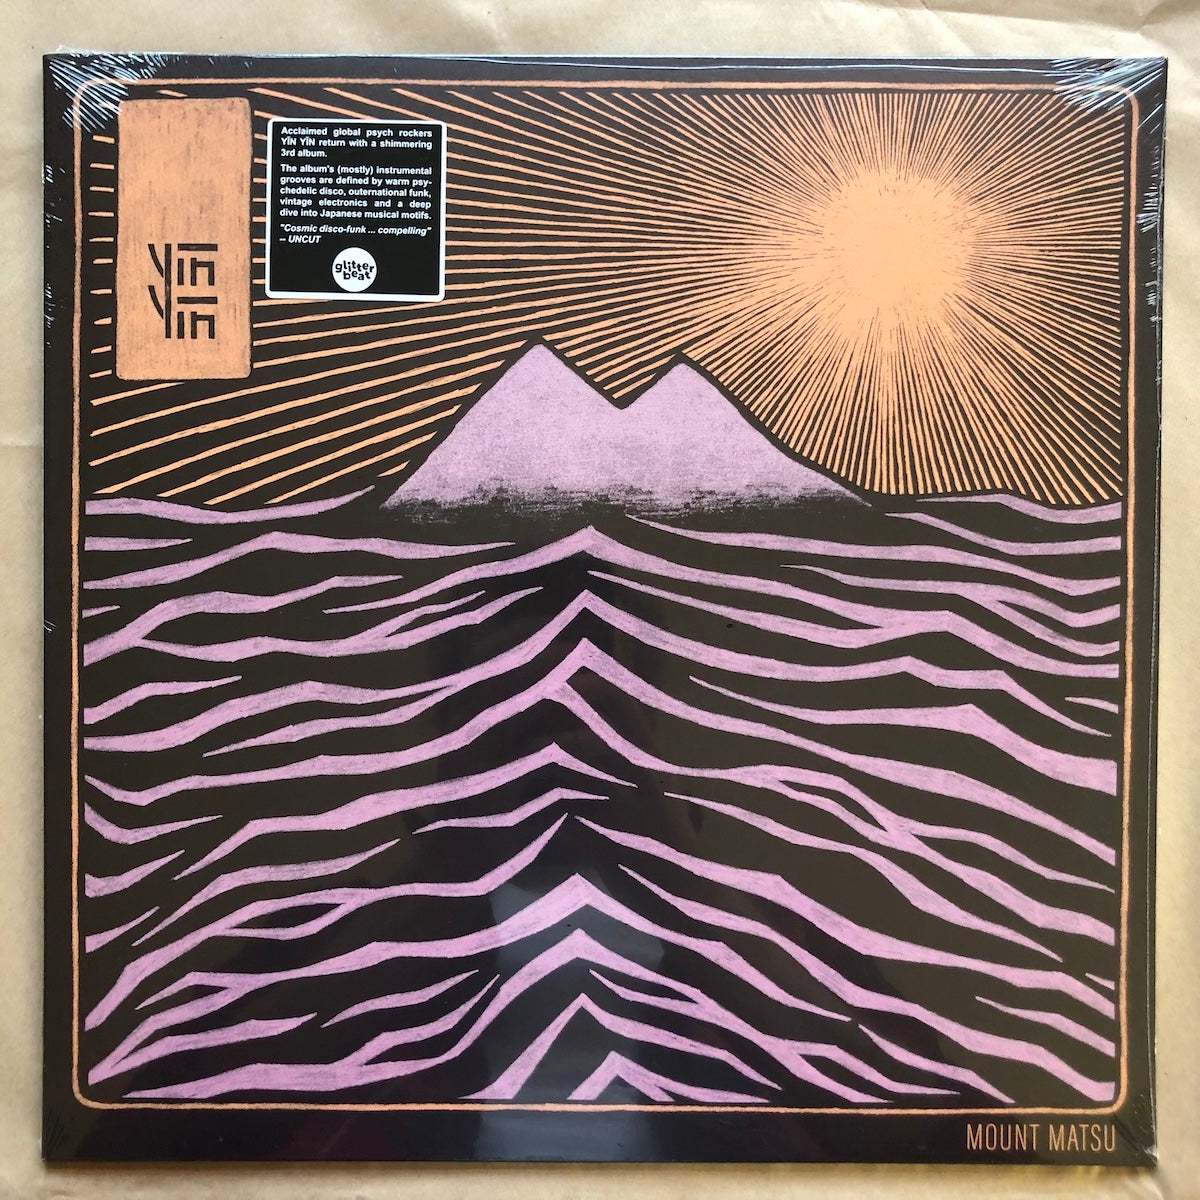 Mount Matsu: Vinyl LP